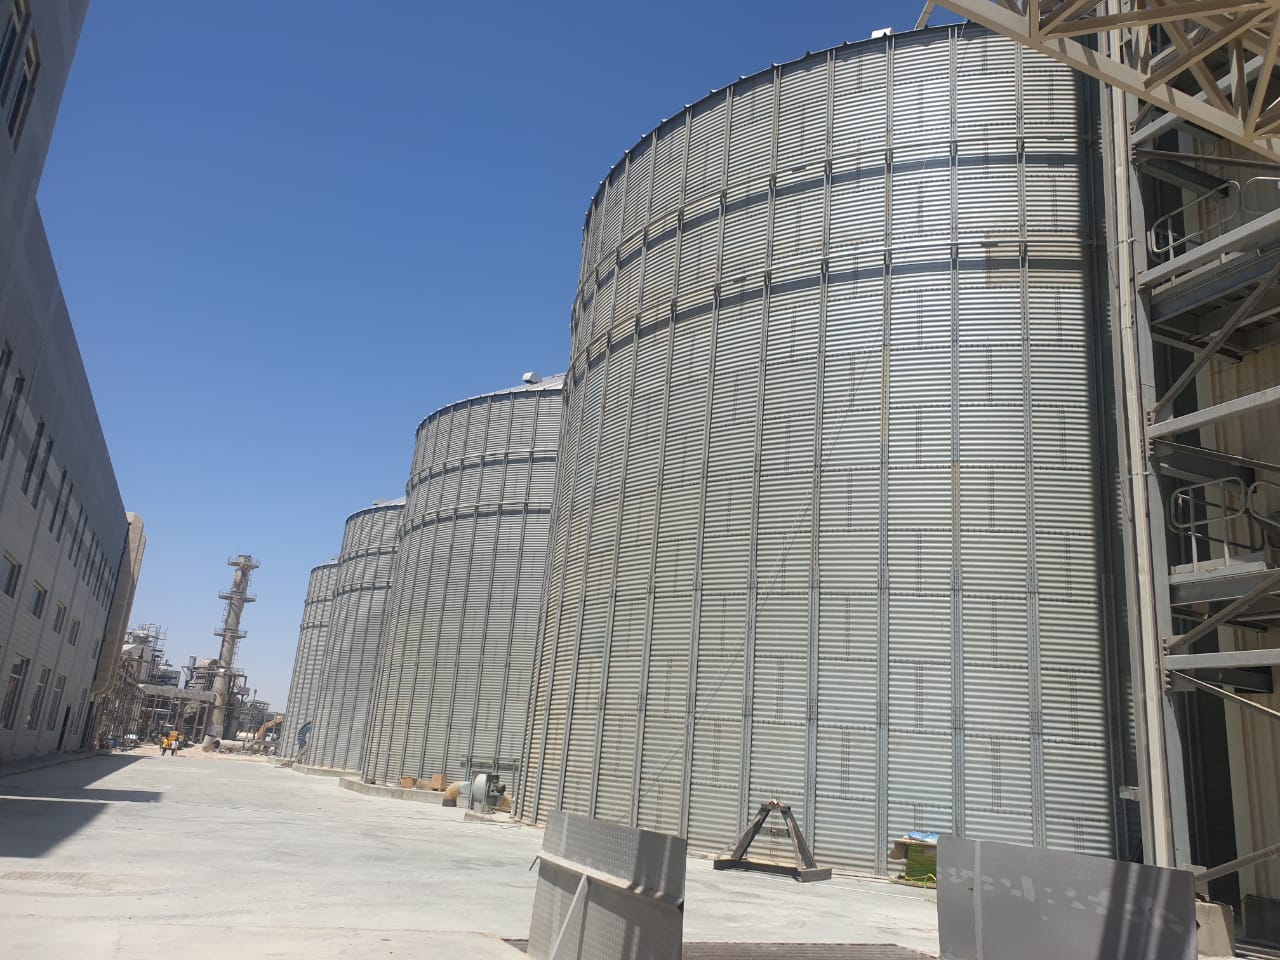 4 Flat bottom silos in Saudi Arabia